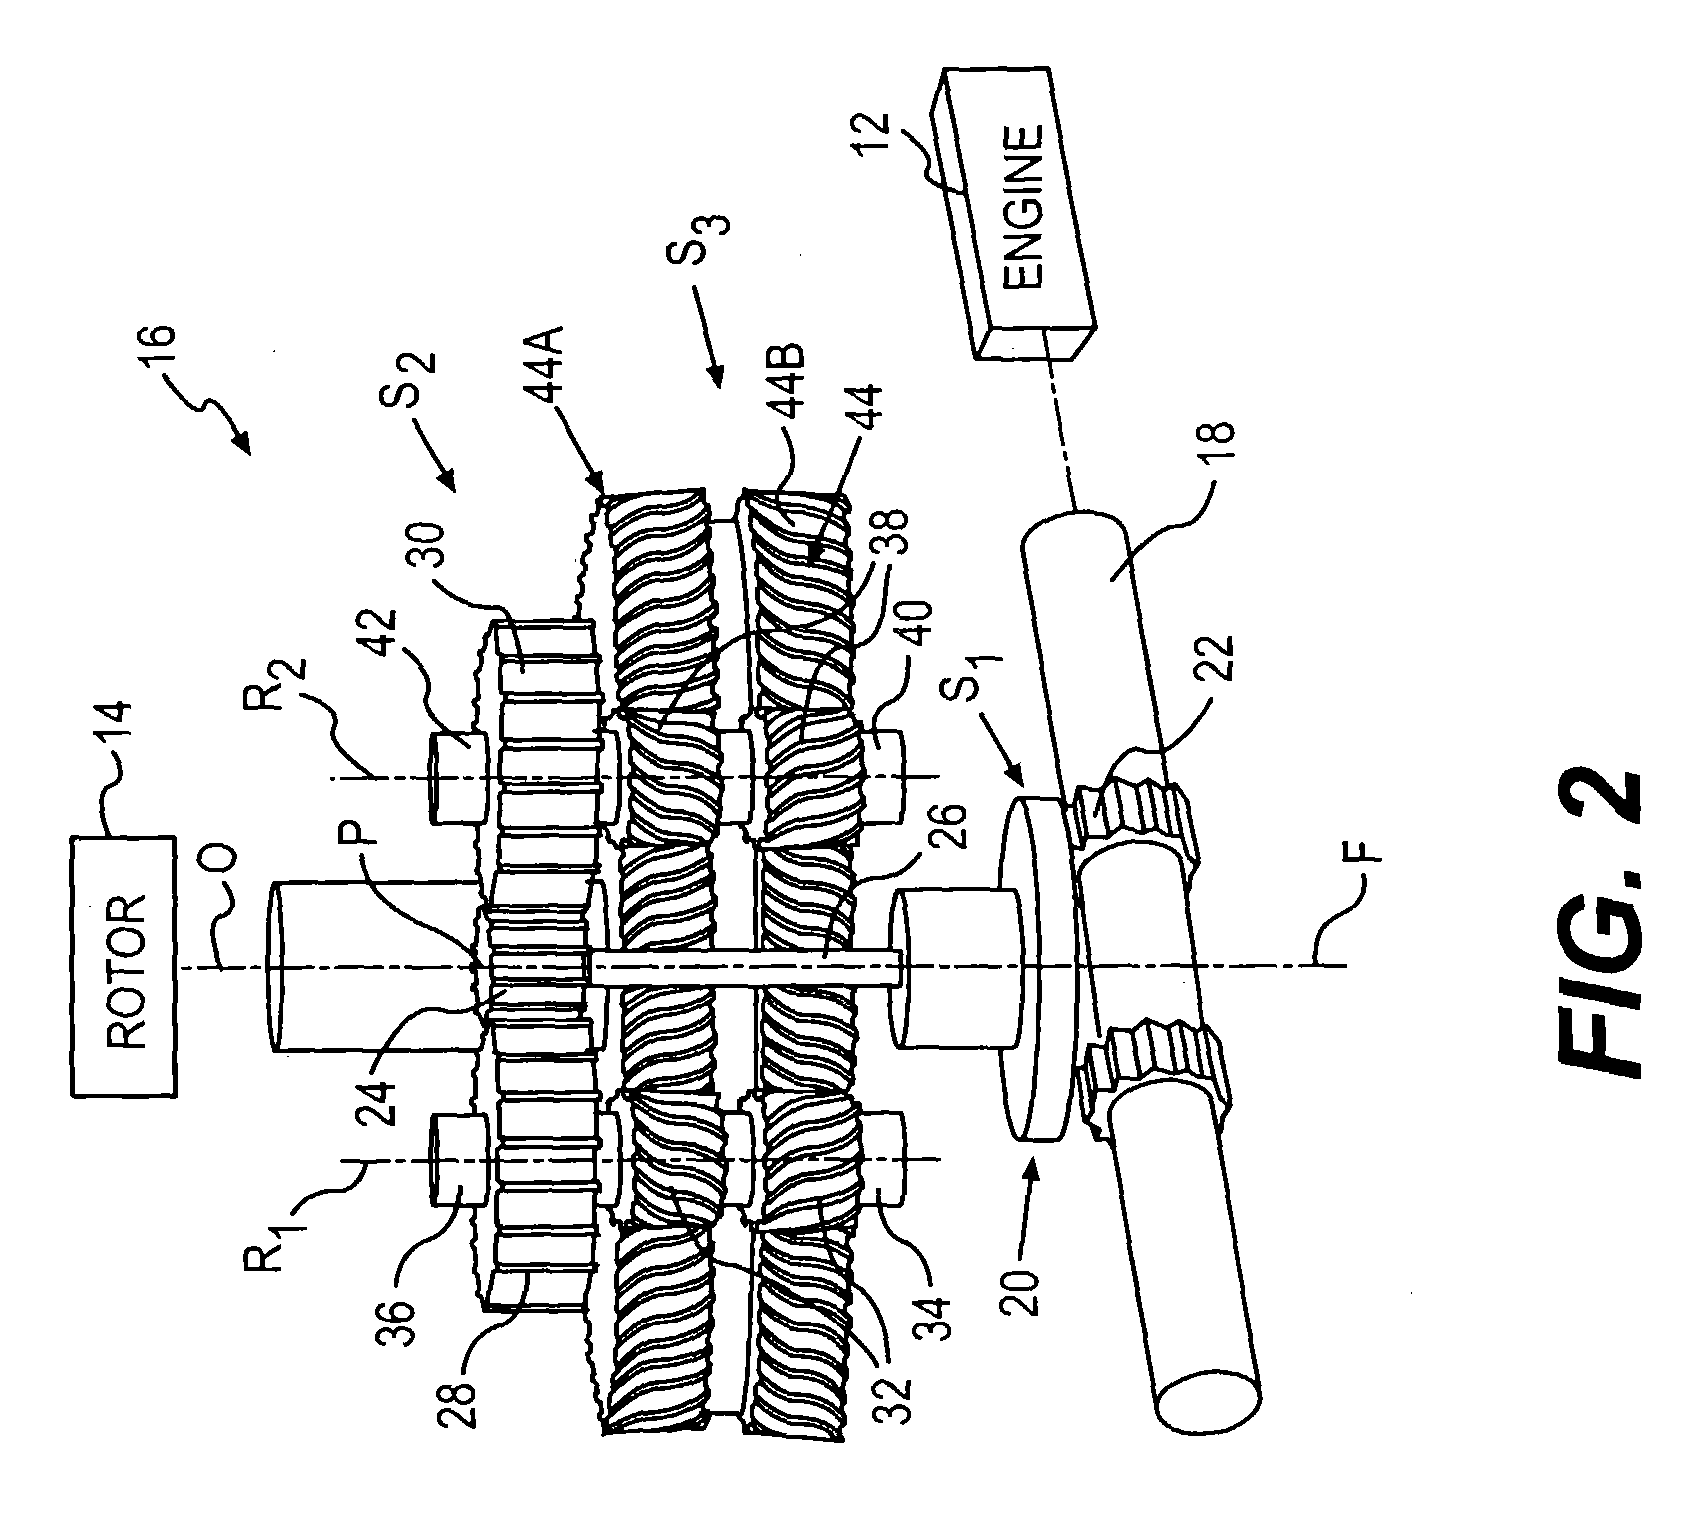 Split-torque gear box